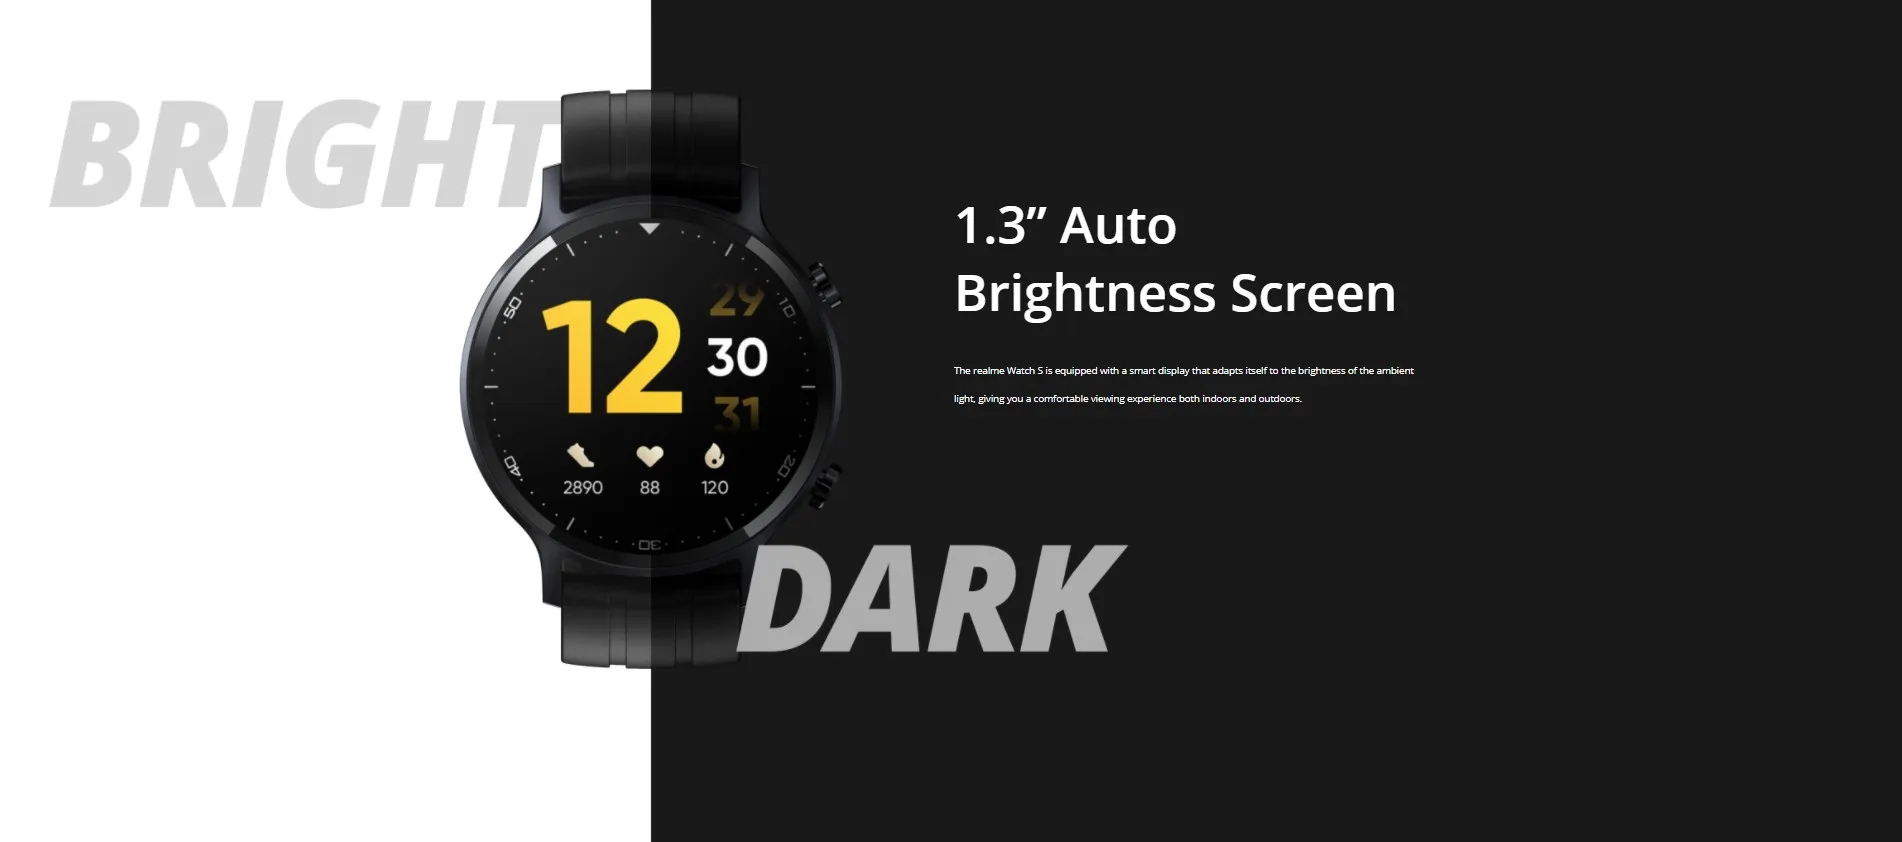 Realme Smart Watch S- 1.3 Auto Brightness screen- Smart cell direct 